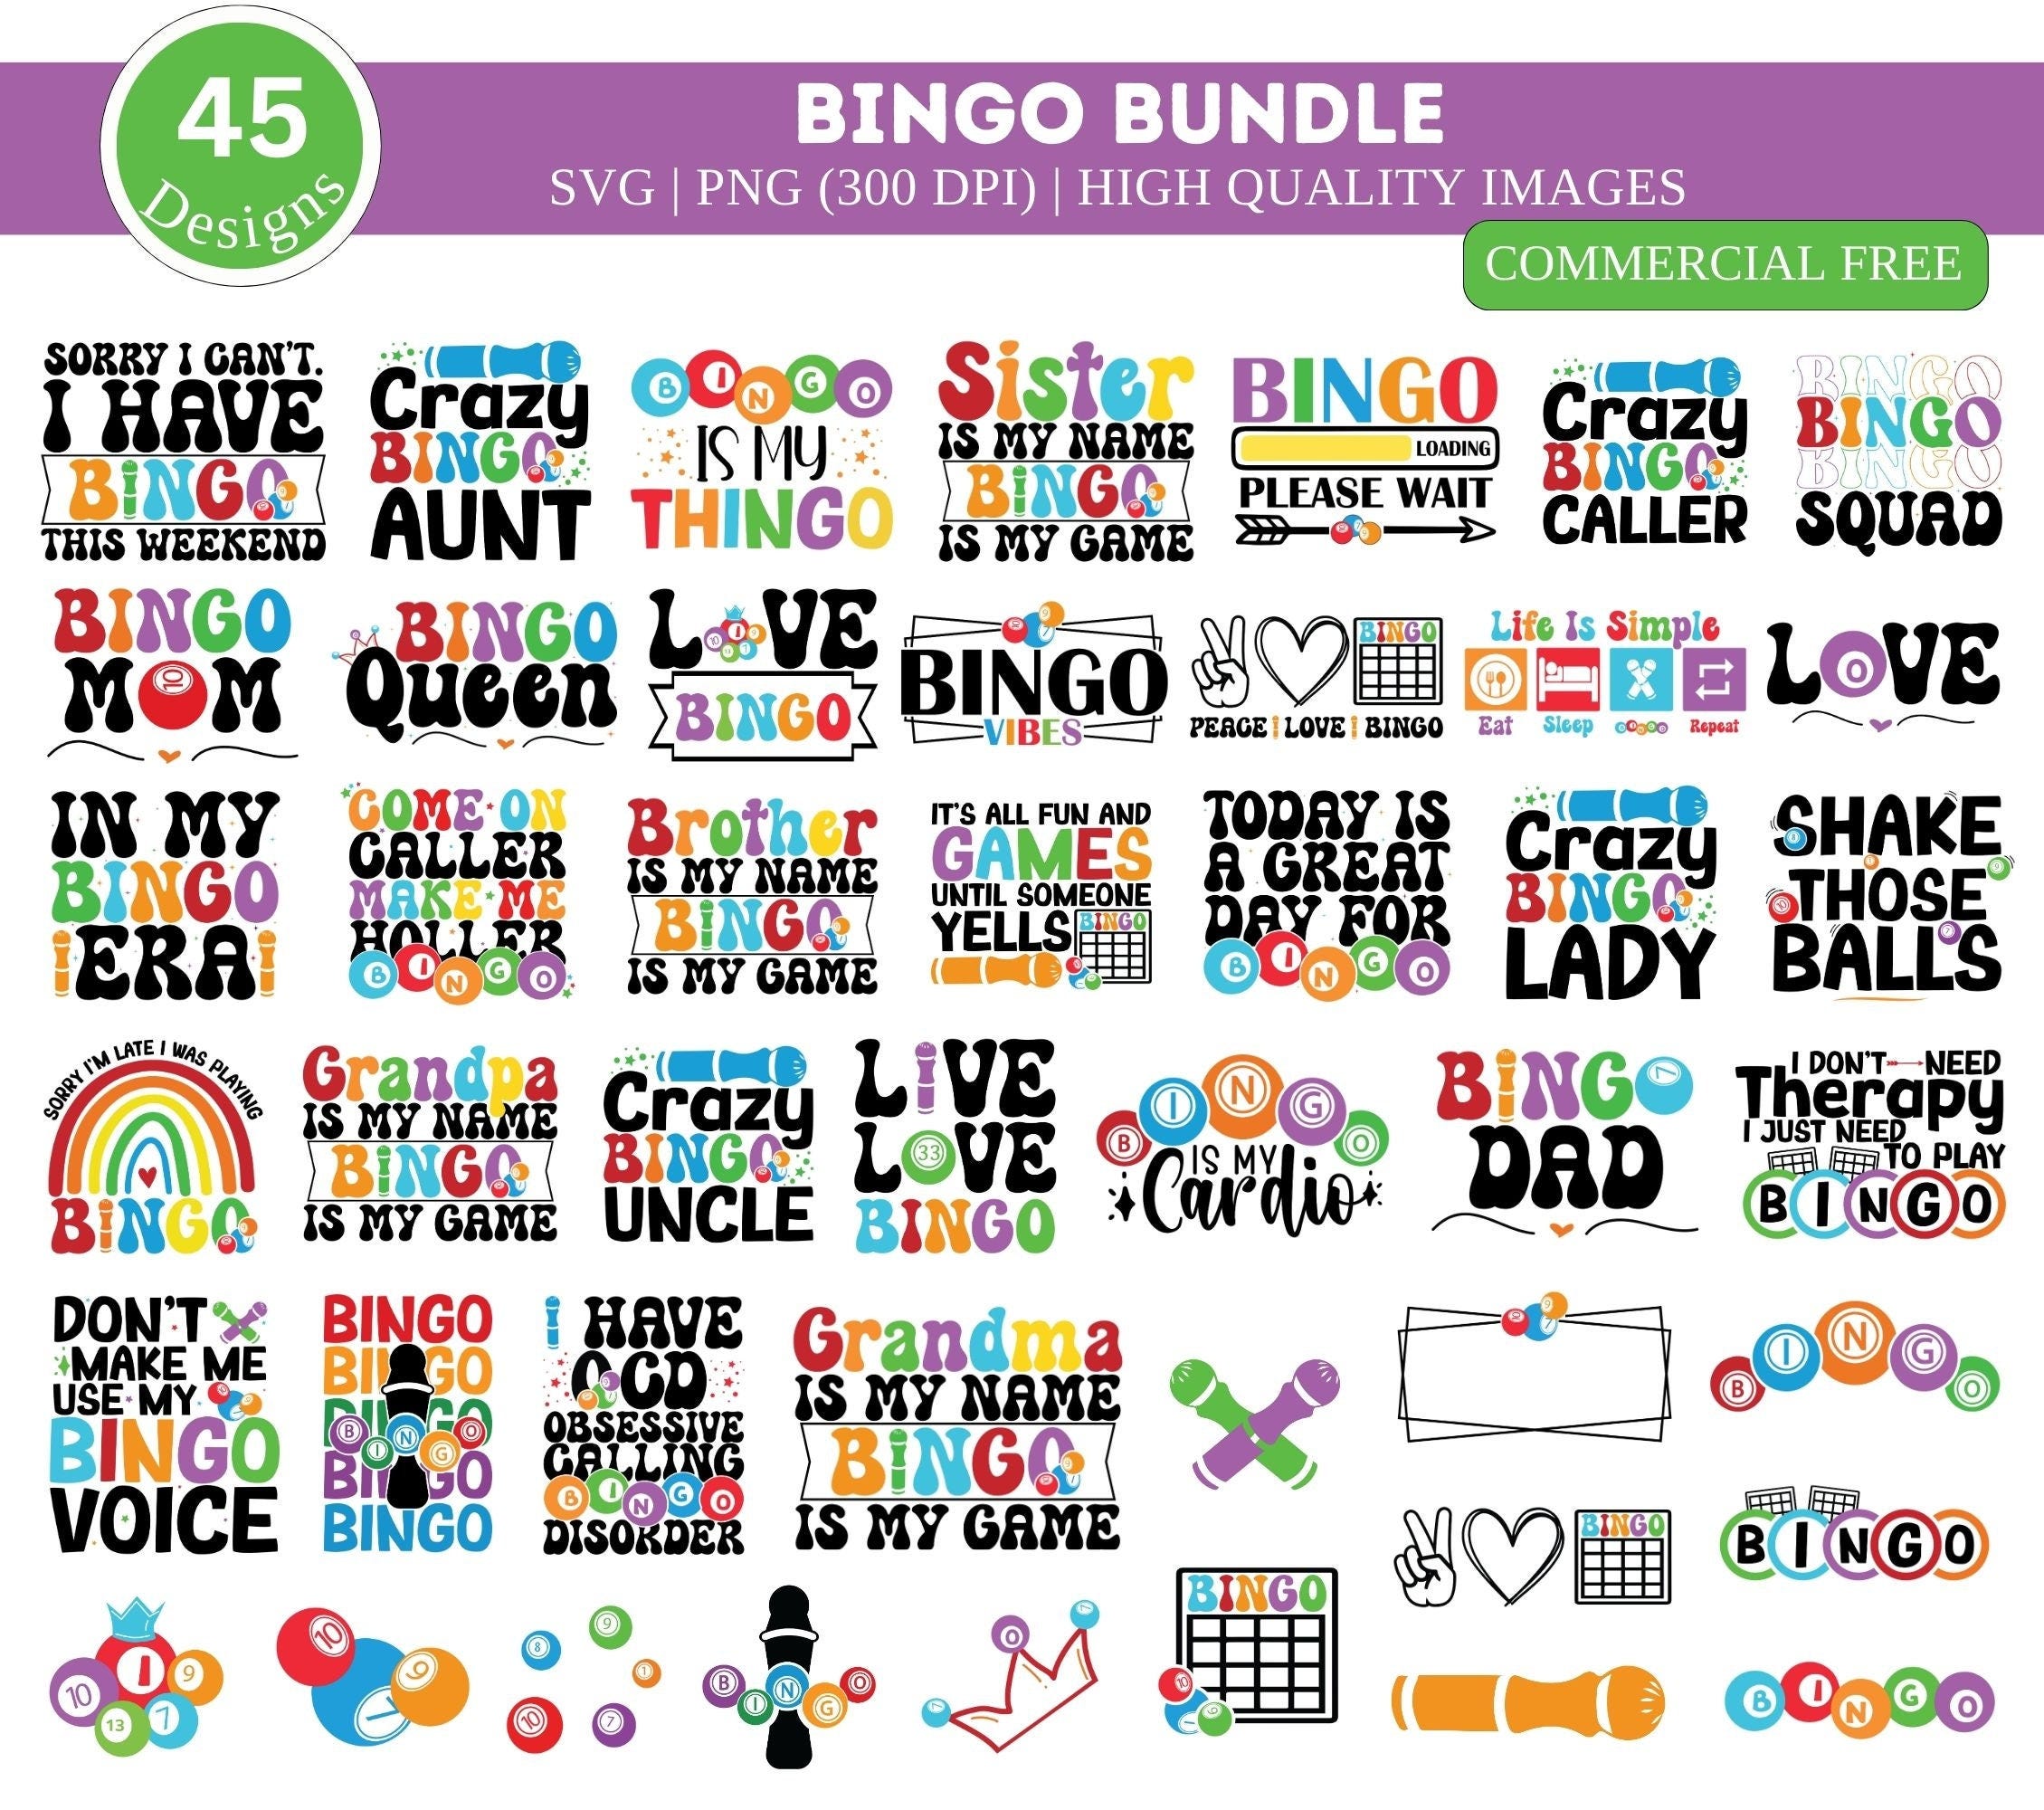 Bingo SVG PNG Bundle| Bingo Png| Bingo Card Svg| Bingo Player Svg| Bingo Games Svg| Bingo Shirt Svg| Bingo Victory Svg| Bingo Player png